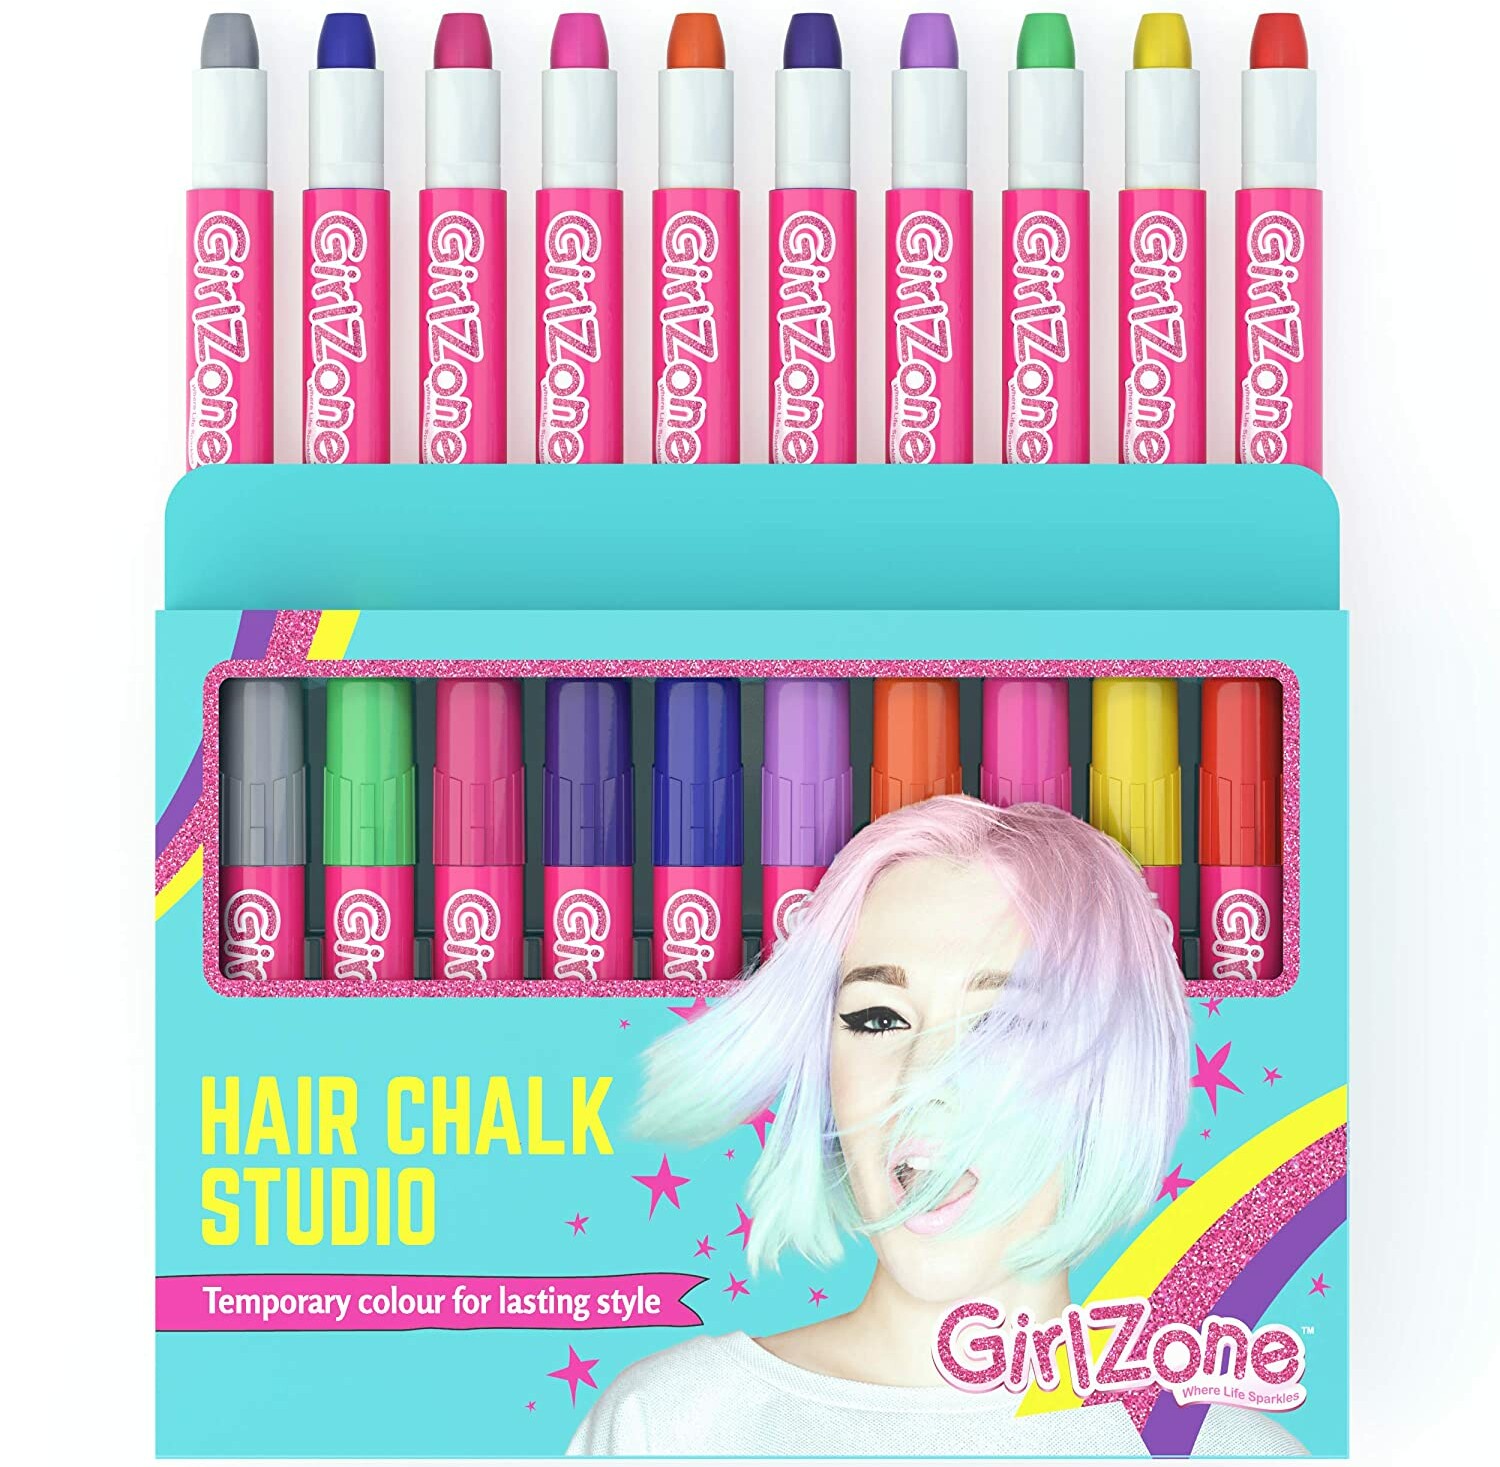 hair chalk set for girls from GirlZon